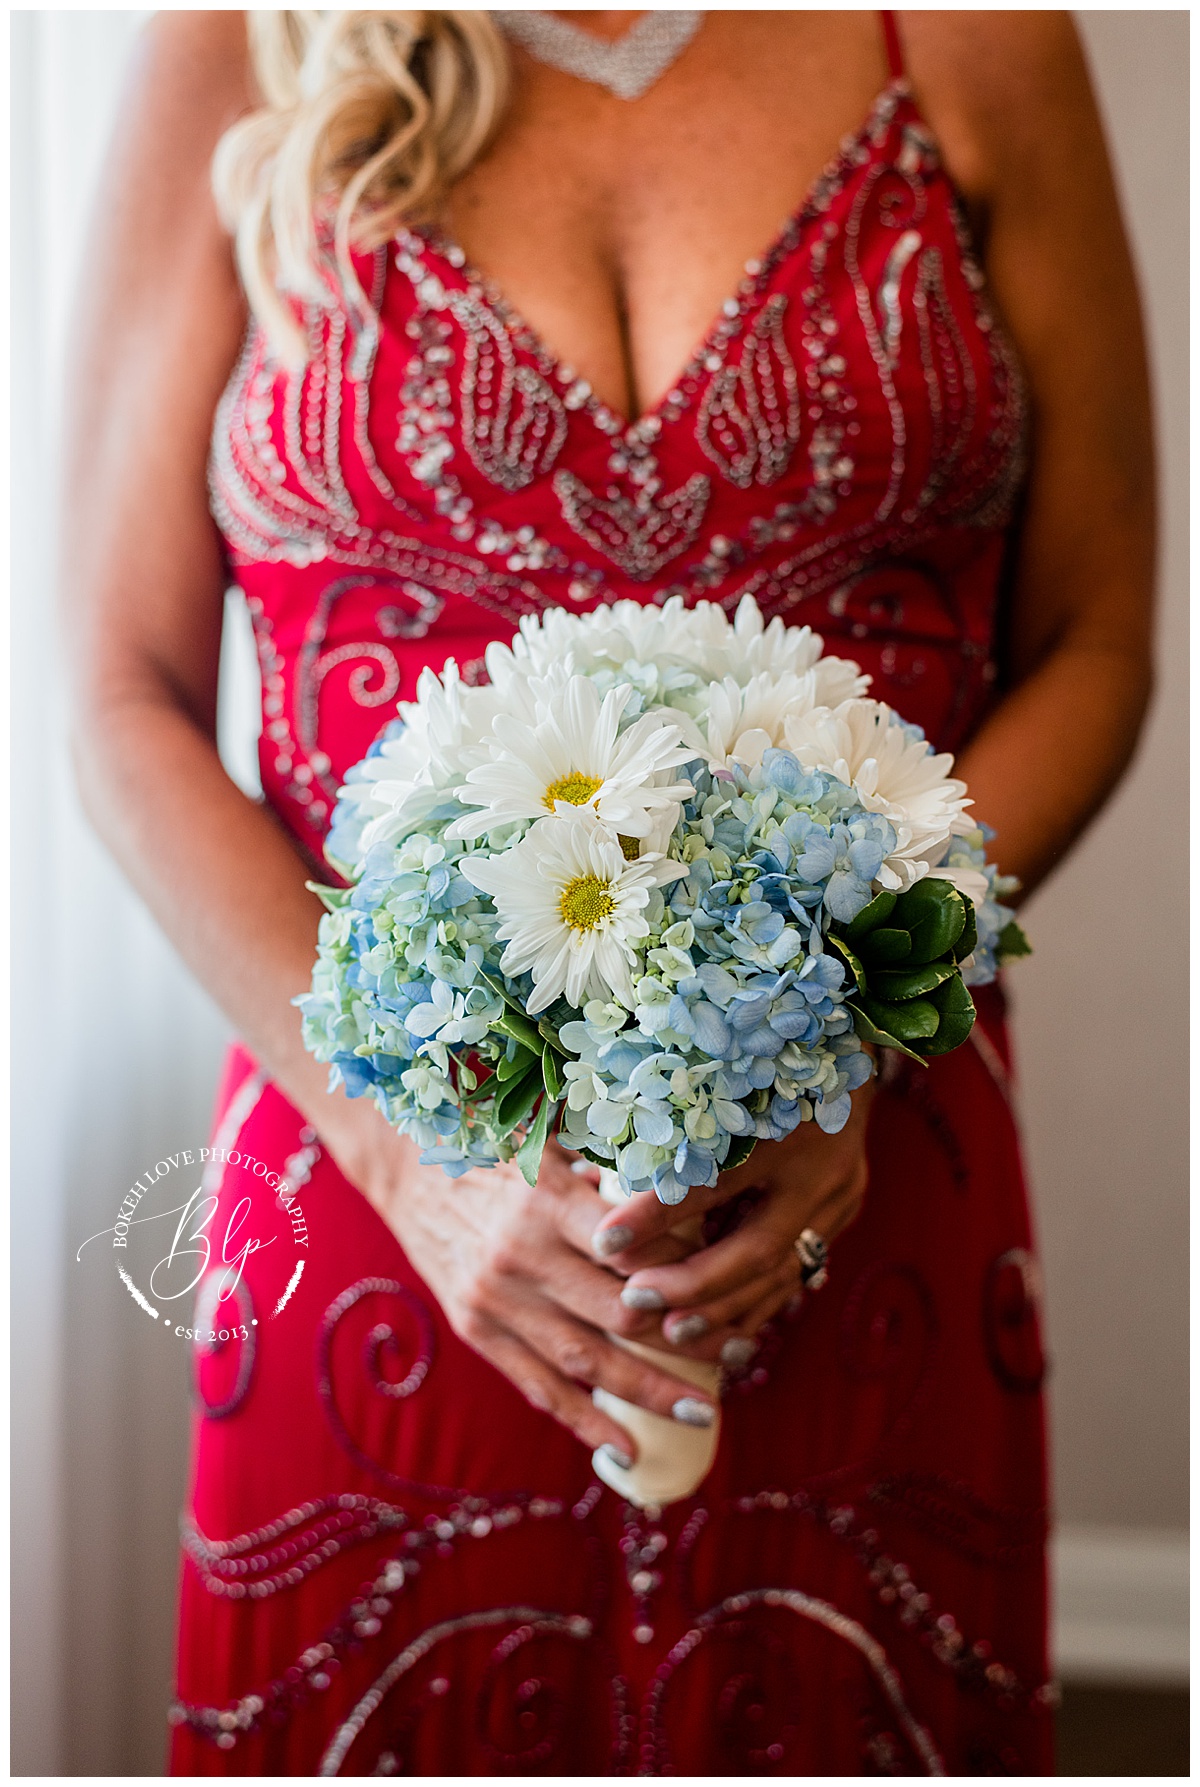 Bokeh Love Photography, Cape May Beach Wedding, Getting Reach Photos, bridesmaid